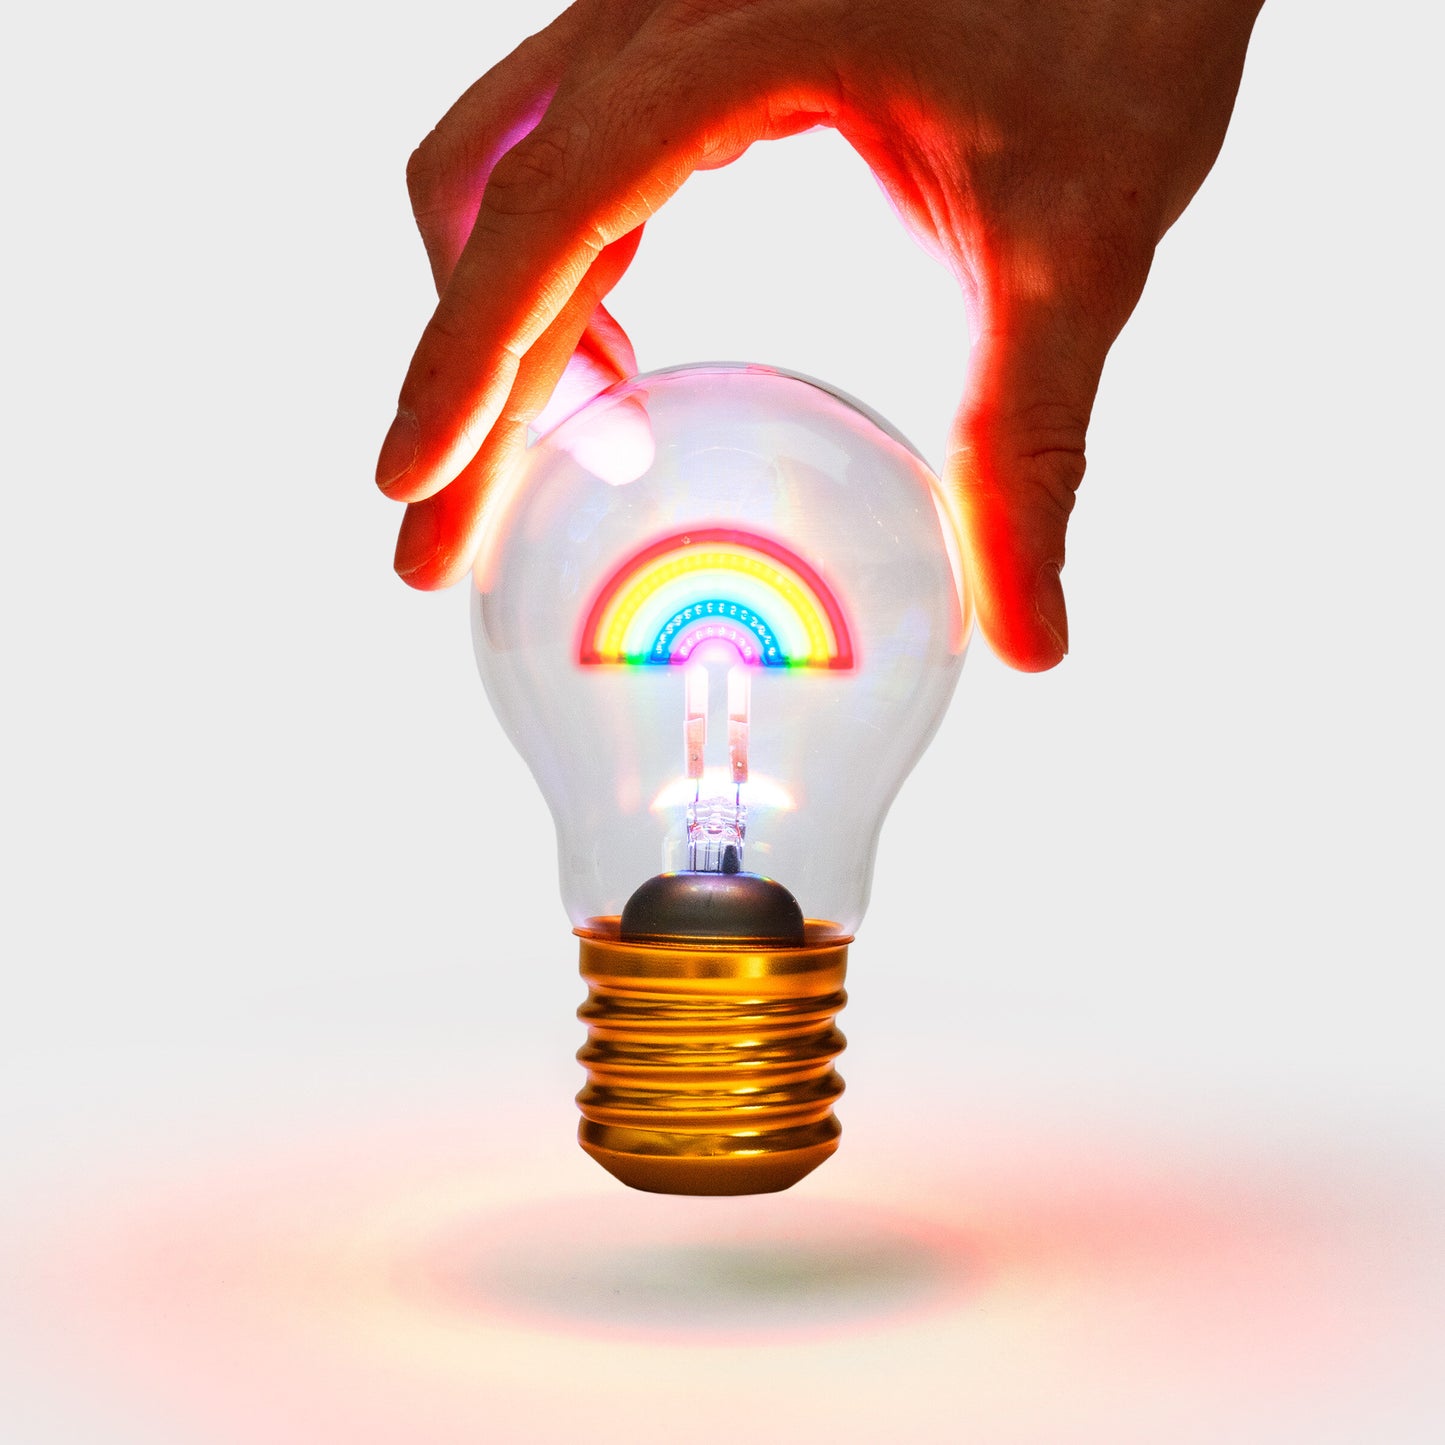 A hand holding a lit up cordless rainbow shaped lightbulb